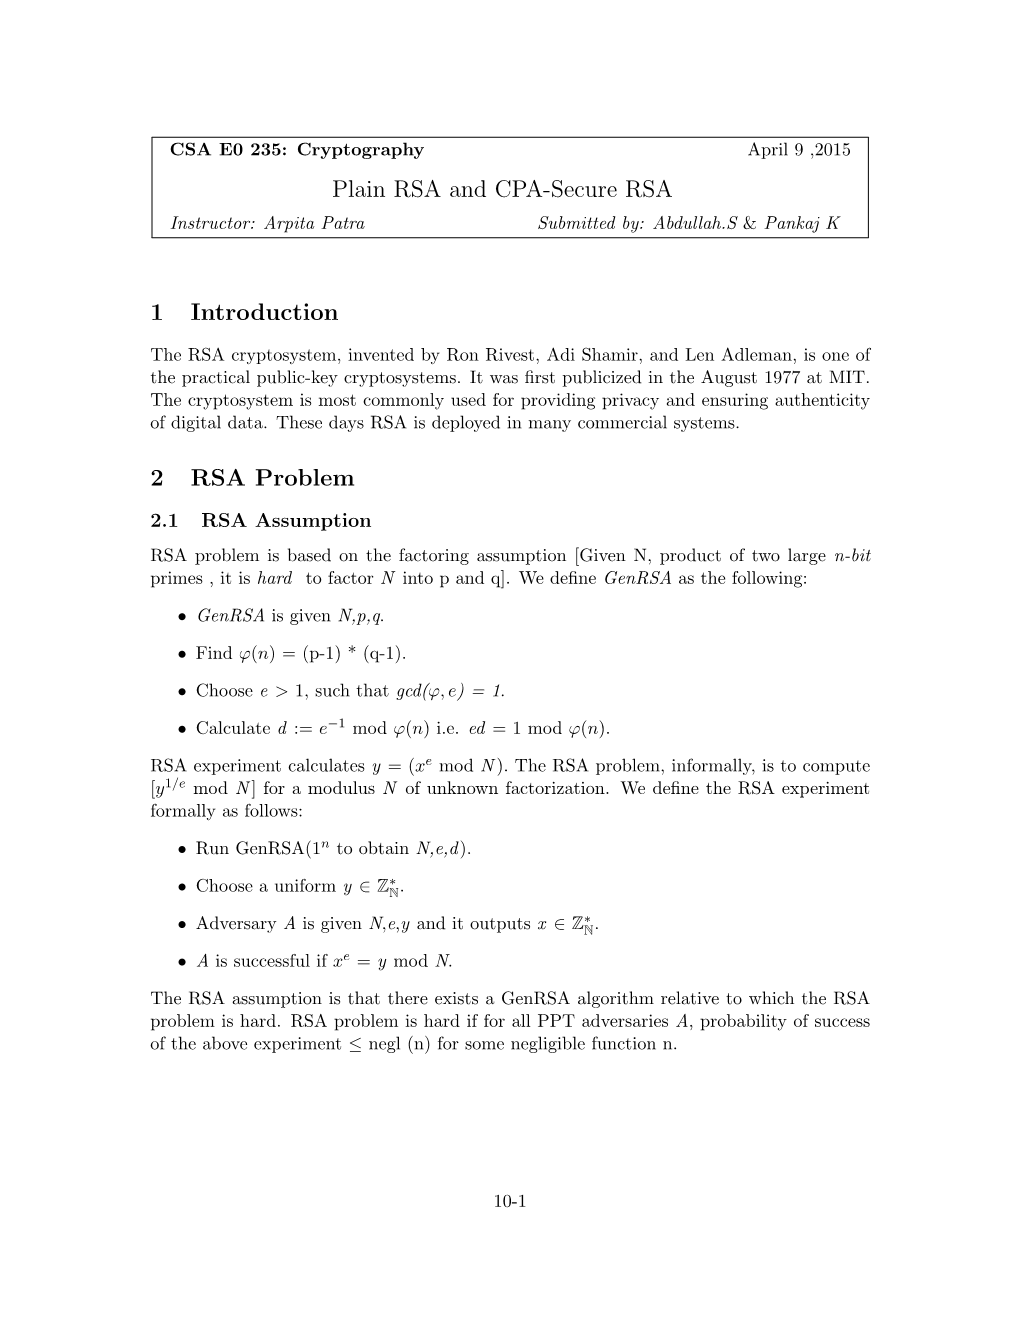 Plain RSA and CPA-Secure RSA 1 Introduction 2 RSA Problem